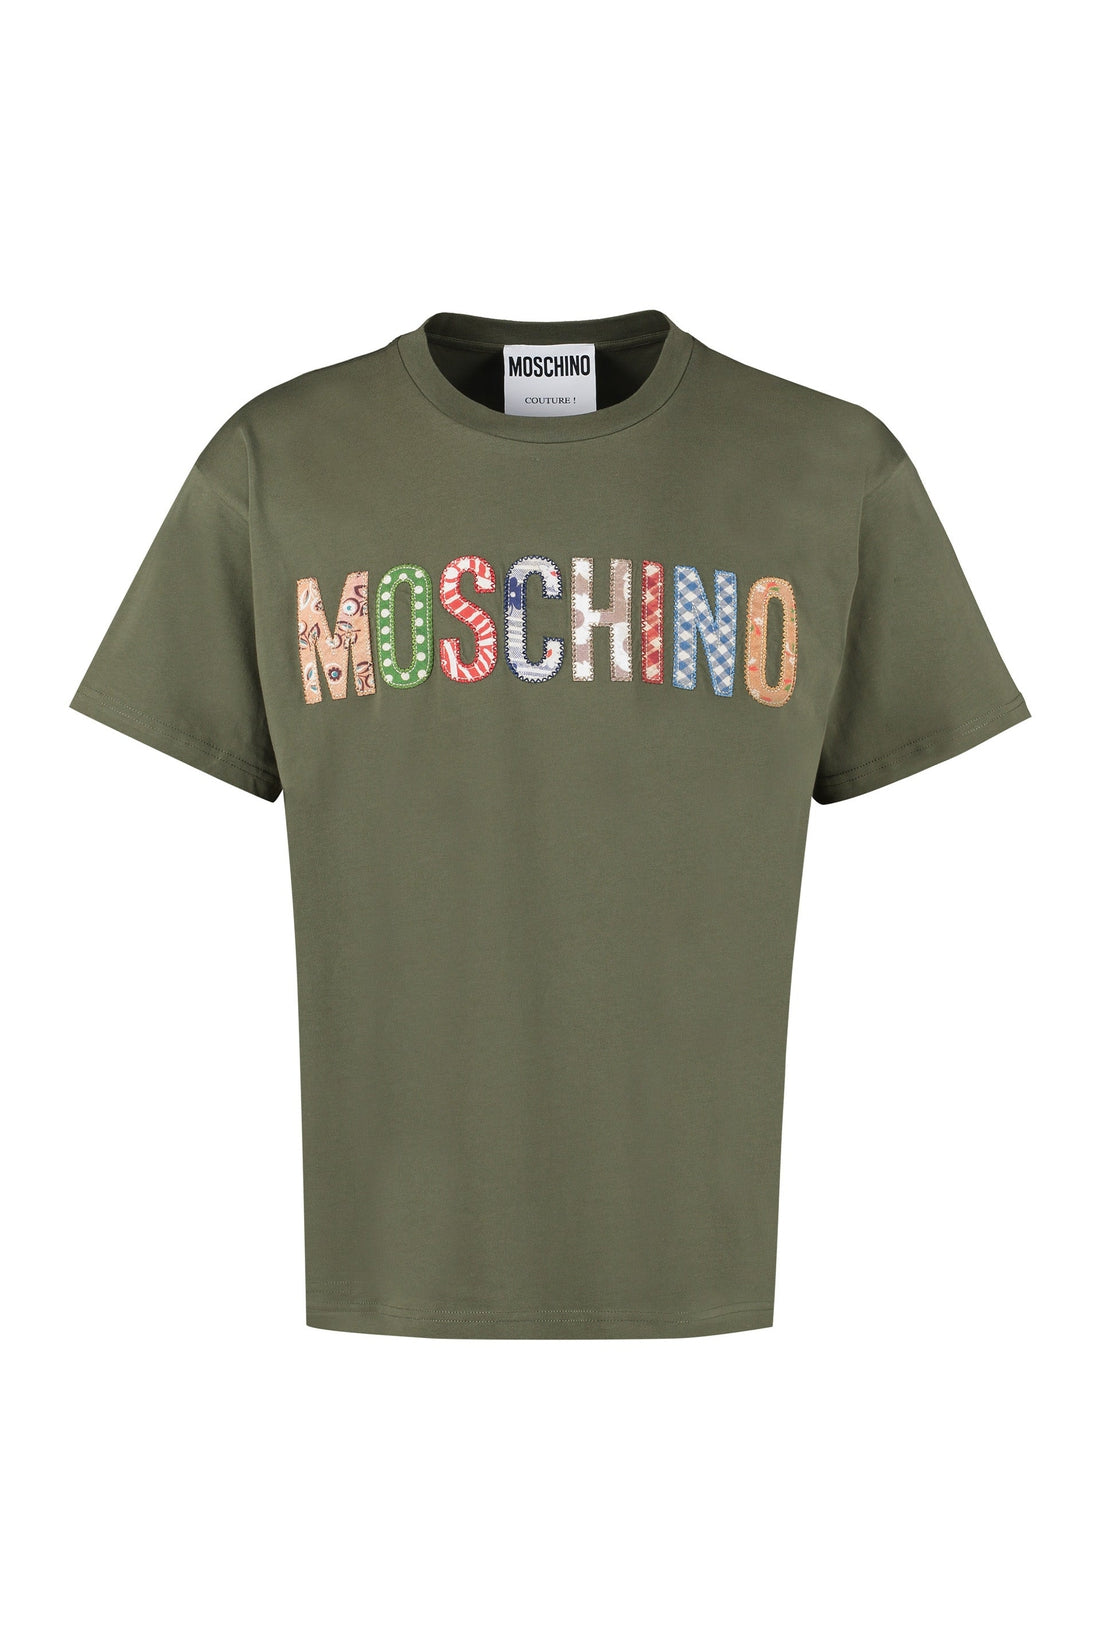 Moschino-OUTLET-SALE-Logo cotton t-shirt-ARCHIVIST